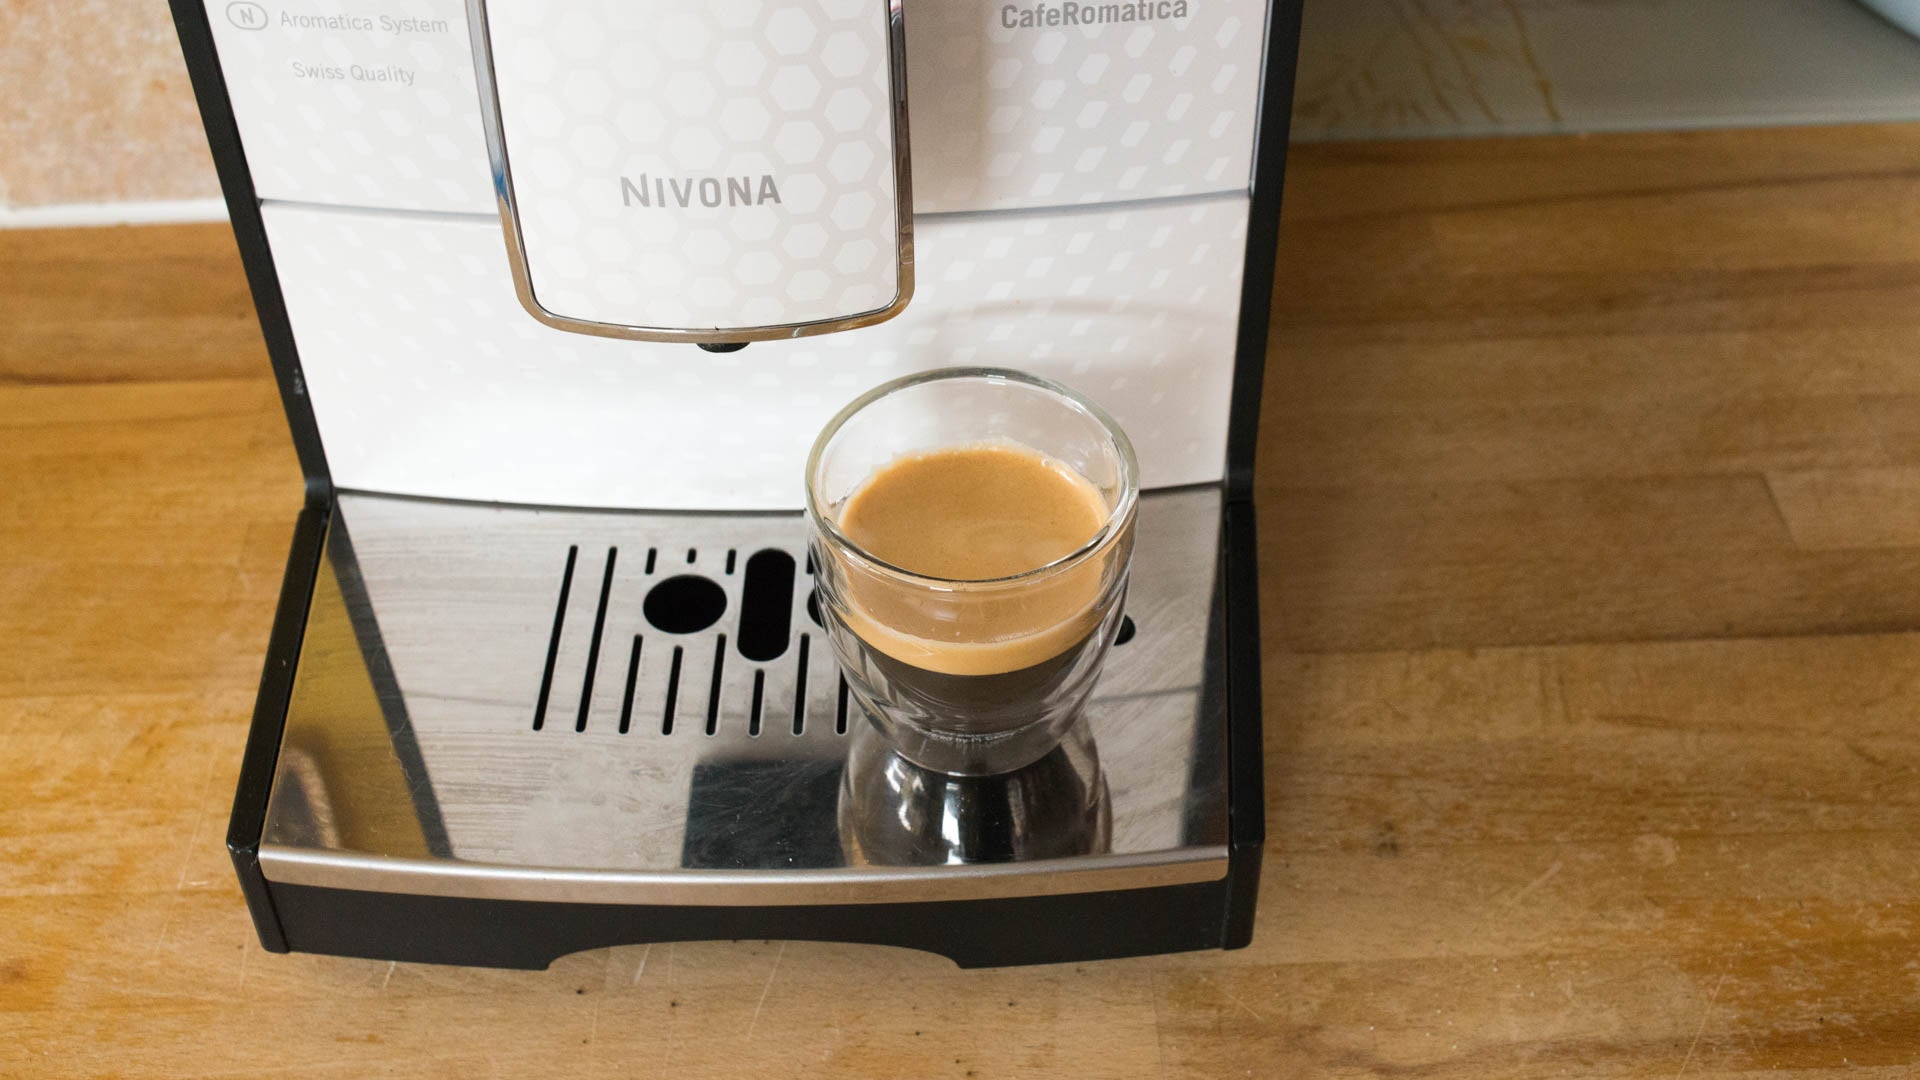 Nivona CafeRomatica 778 coffee machine with an espresso shot.